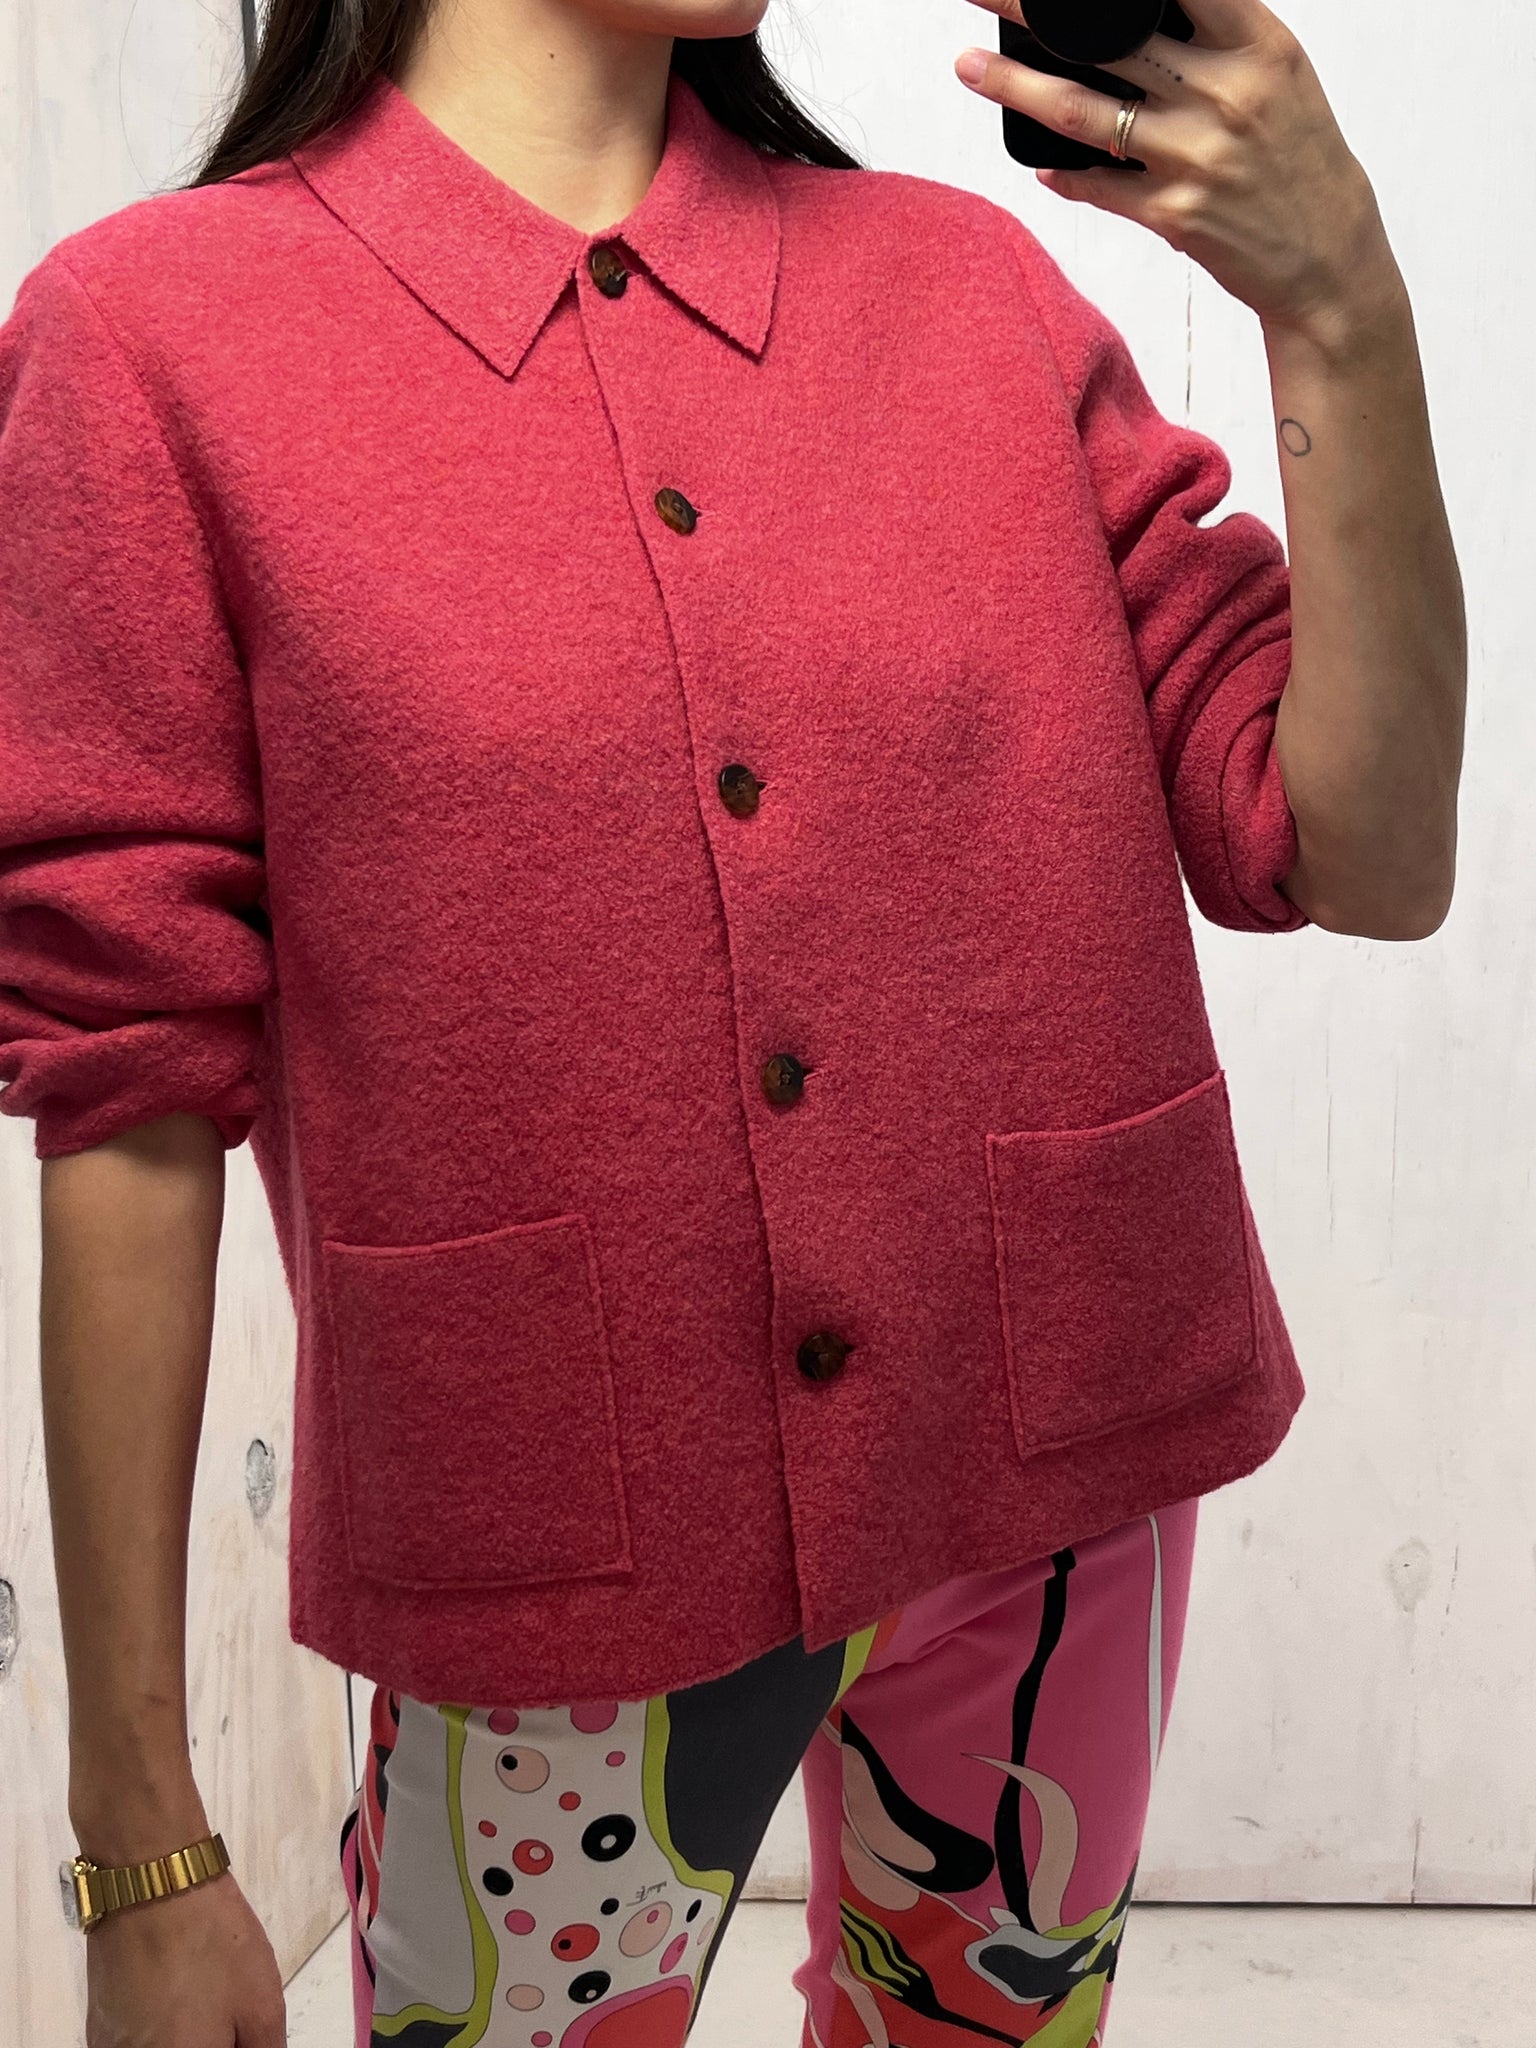 Boiled wool pink chore jacket